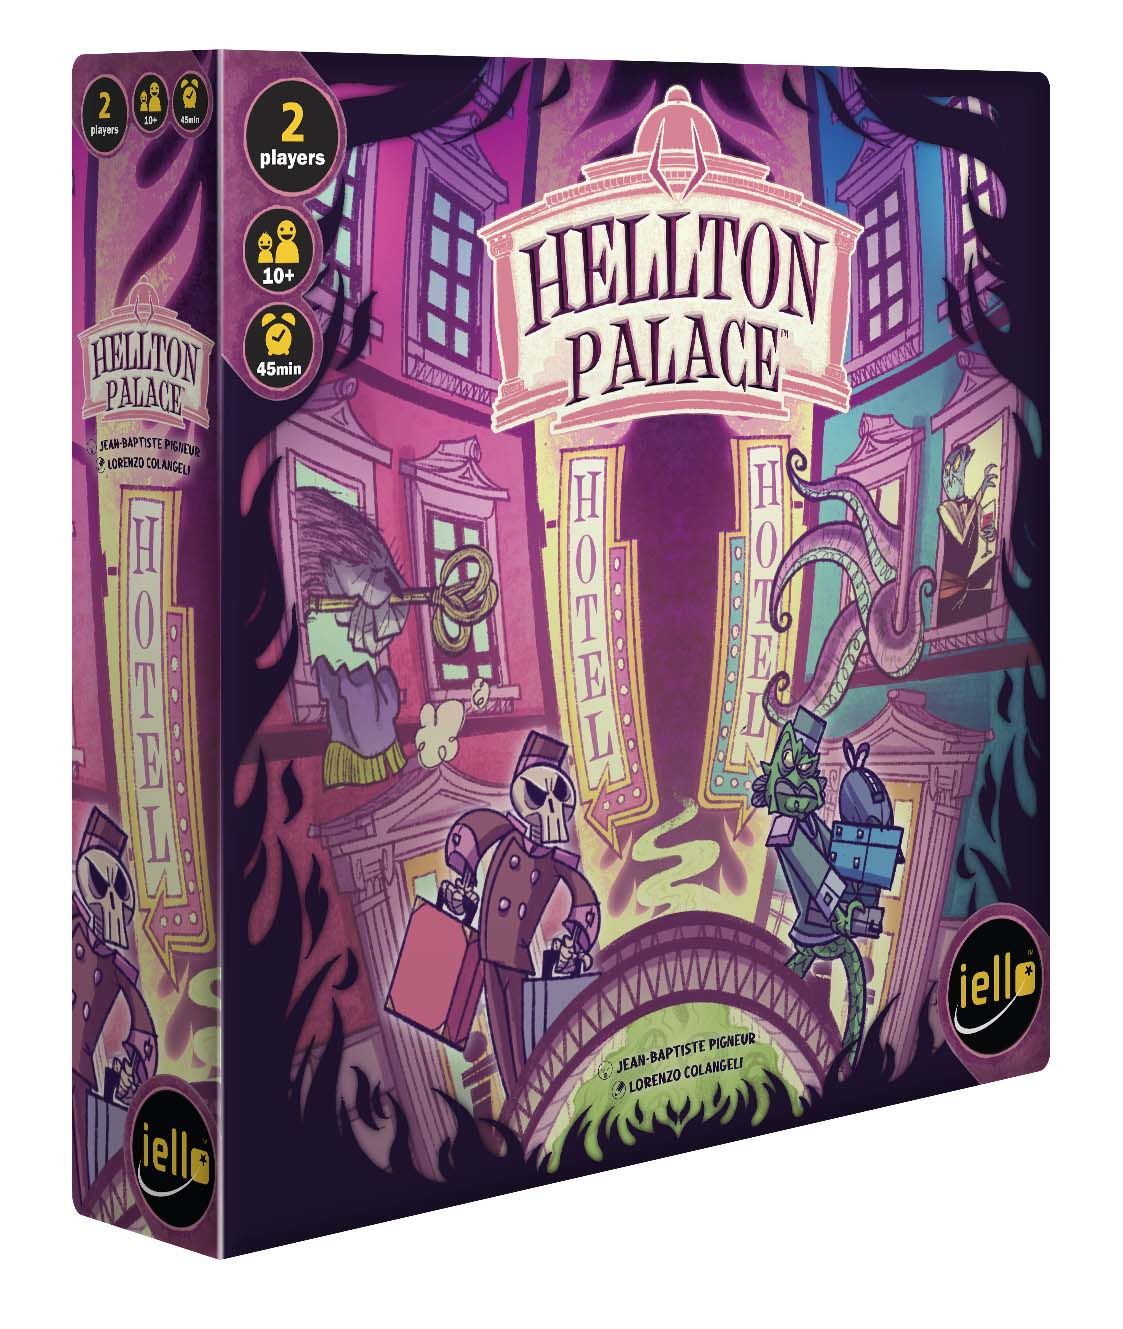 Hellton Palace | Tabernacle Games